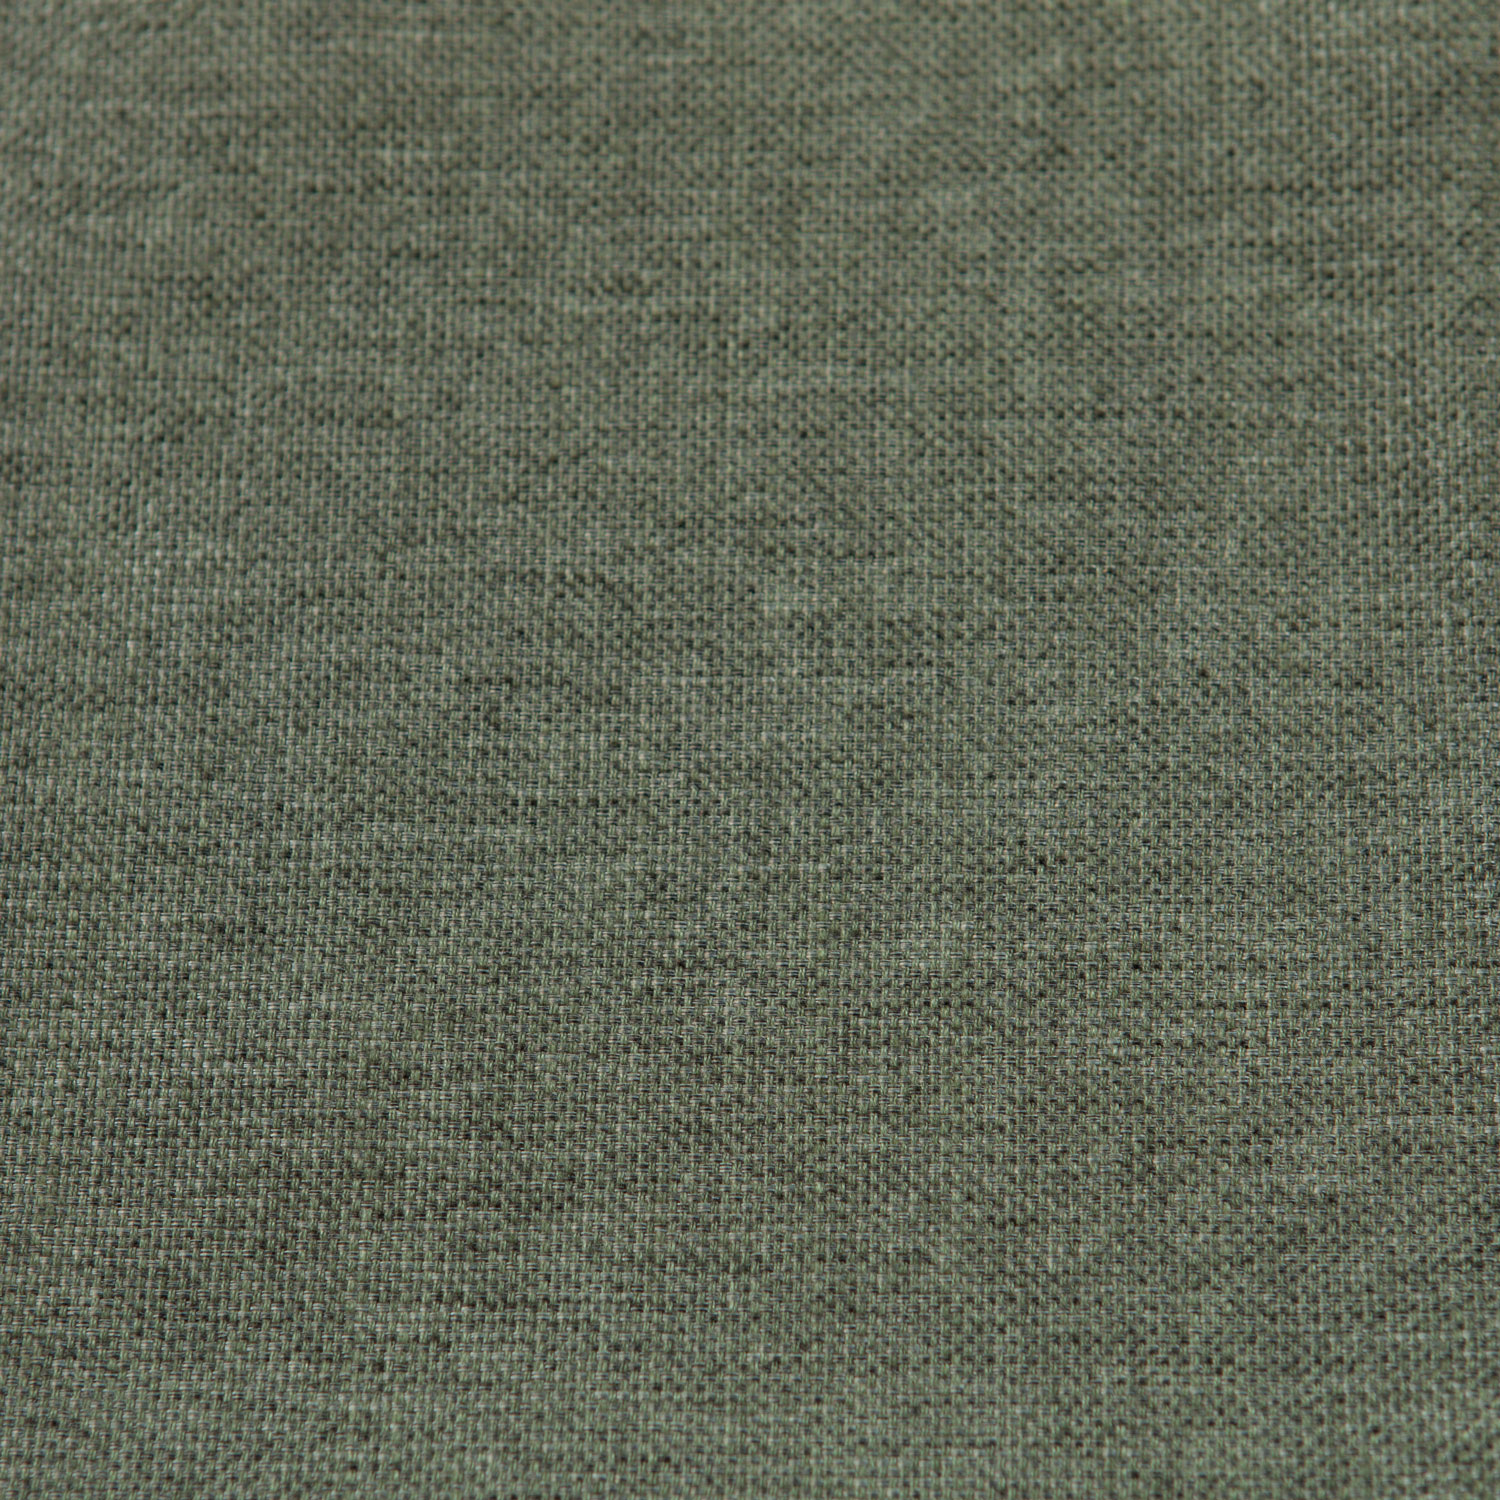 Detail foto bahama green stof